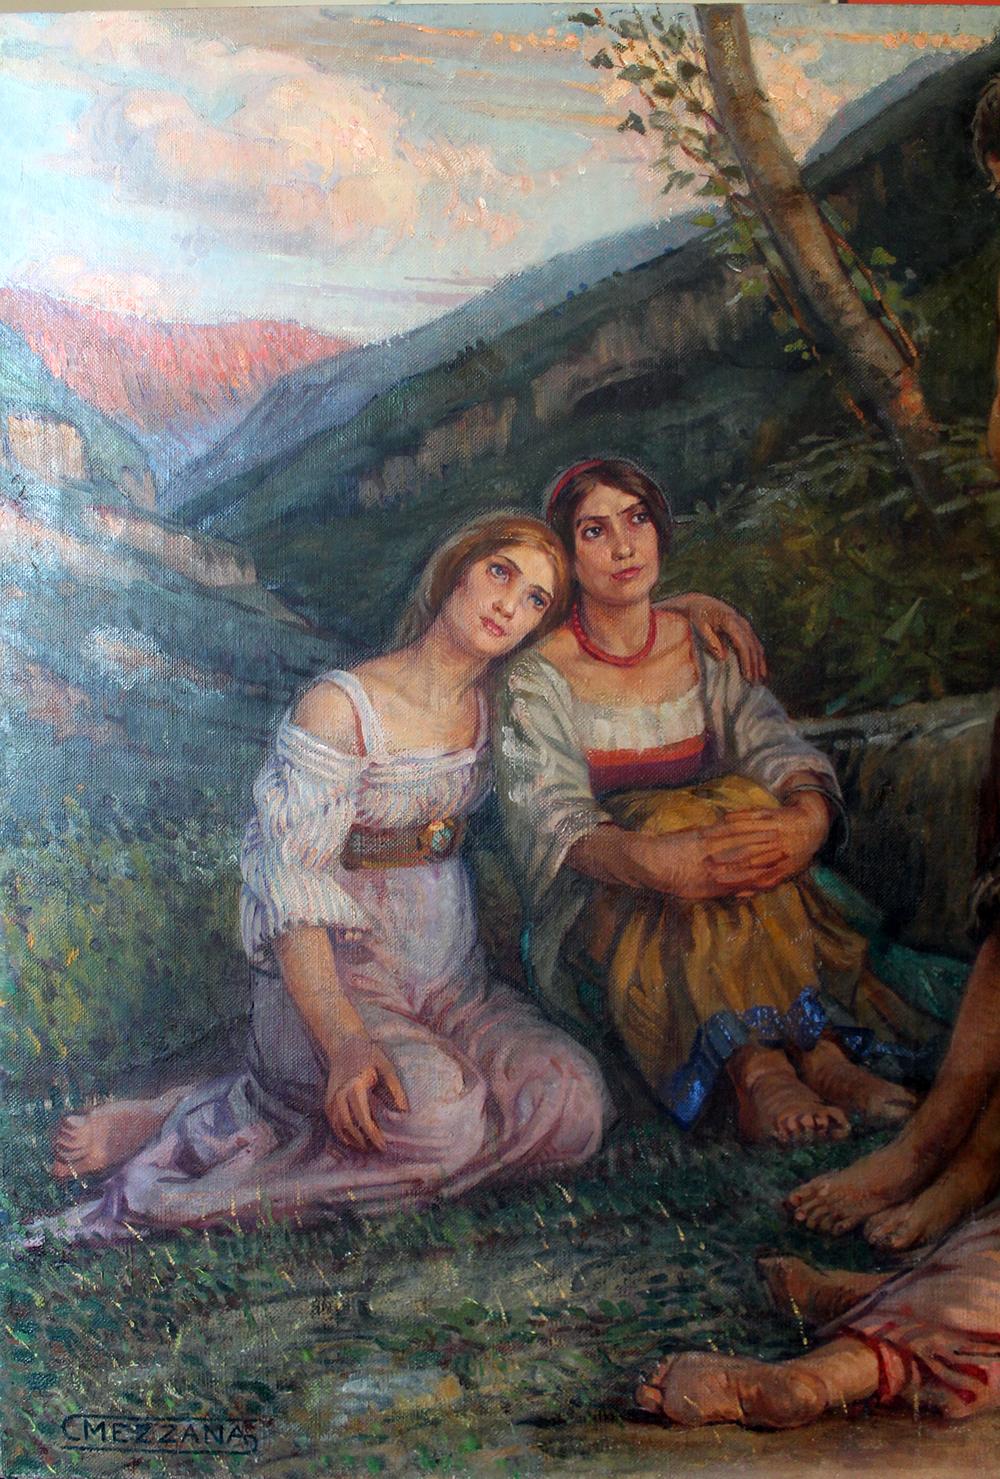 Corrado Mezzana (Italiener Künstler, 1890-1958), großes Ölgemälde (132x102cm), signiert, 1931 im Angebot 12